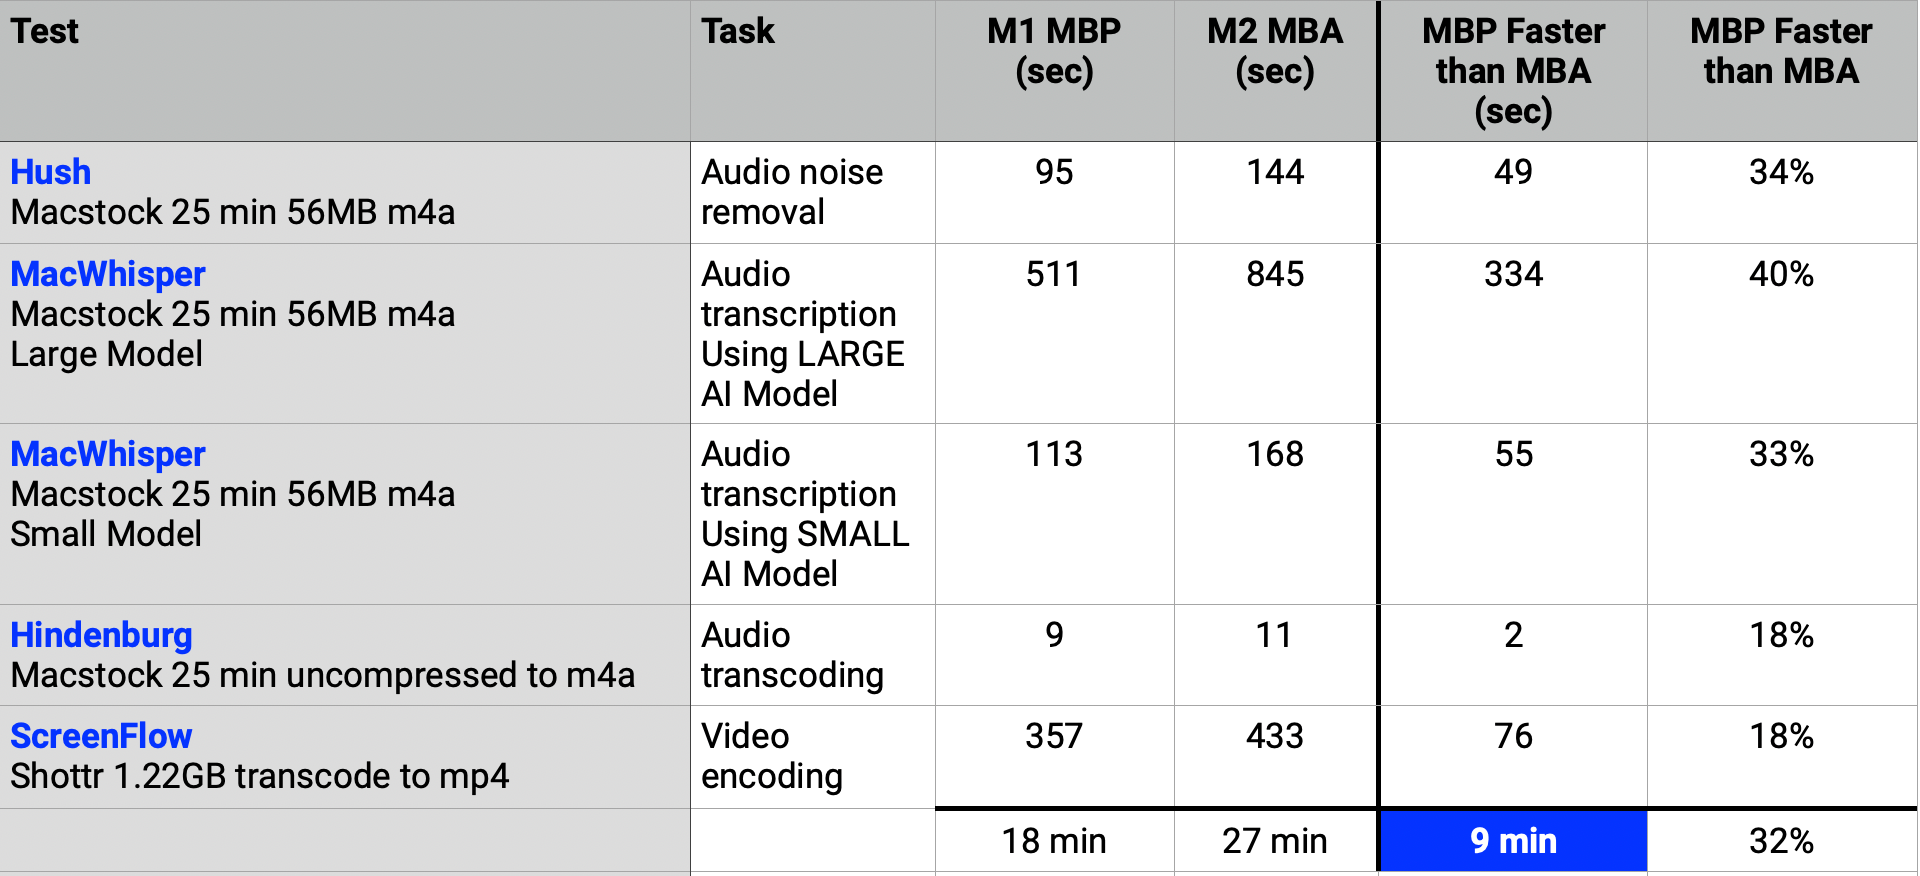 MBP vs MBA Timing Tests. MBP always faster: Hush34%, MacWhisper 40% large model, 33% small model, Hindenburg 18%, ScreenFlow 18%